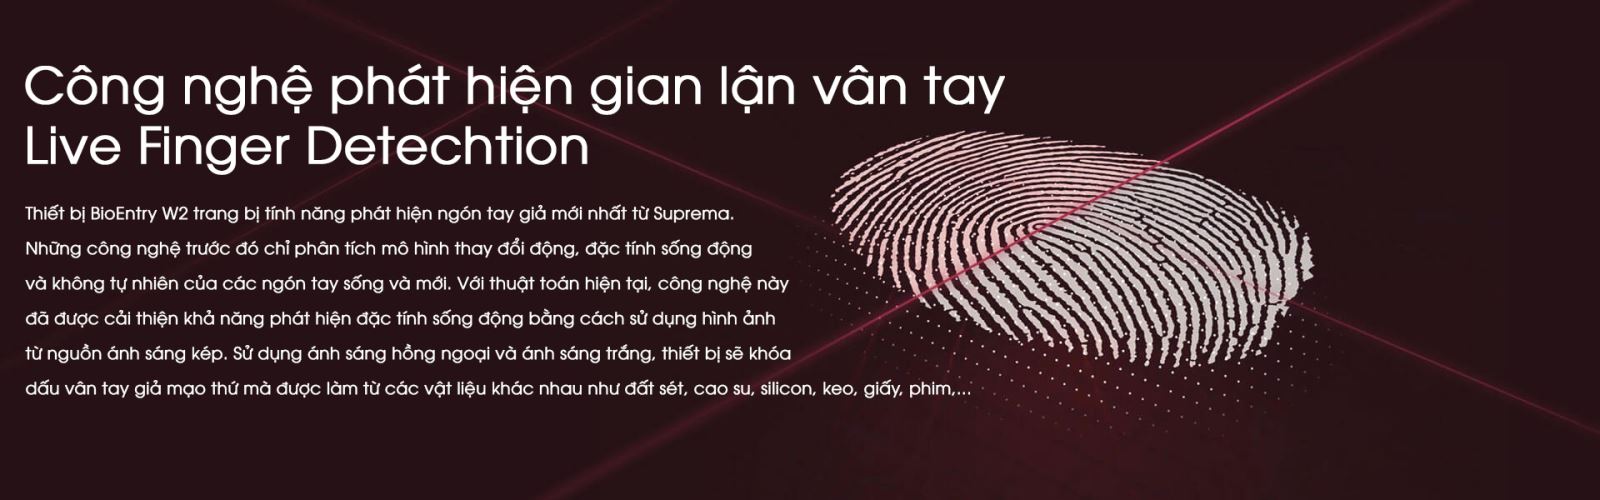 cong-nghe-chong-gian-lan-van-tay-fingerprint-bioentry-w2